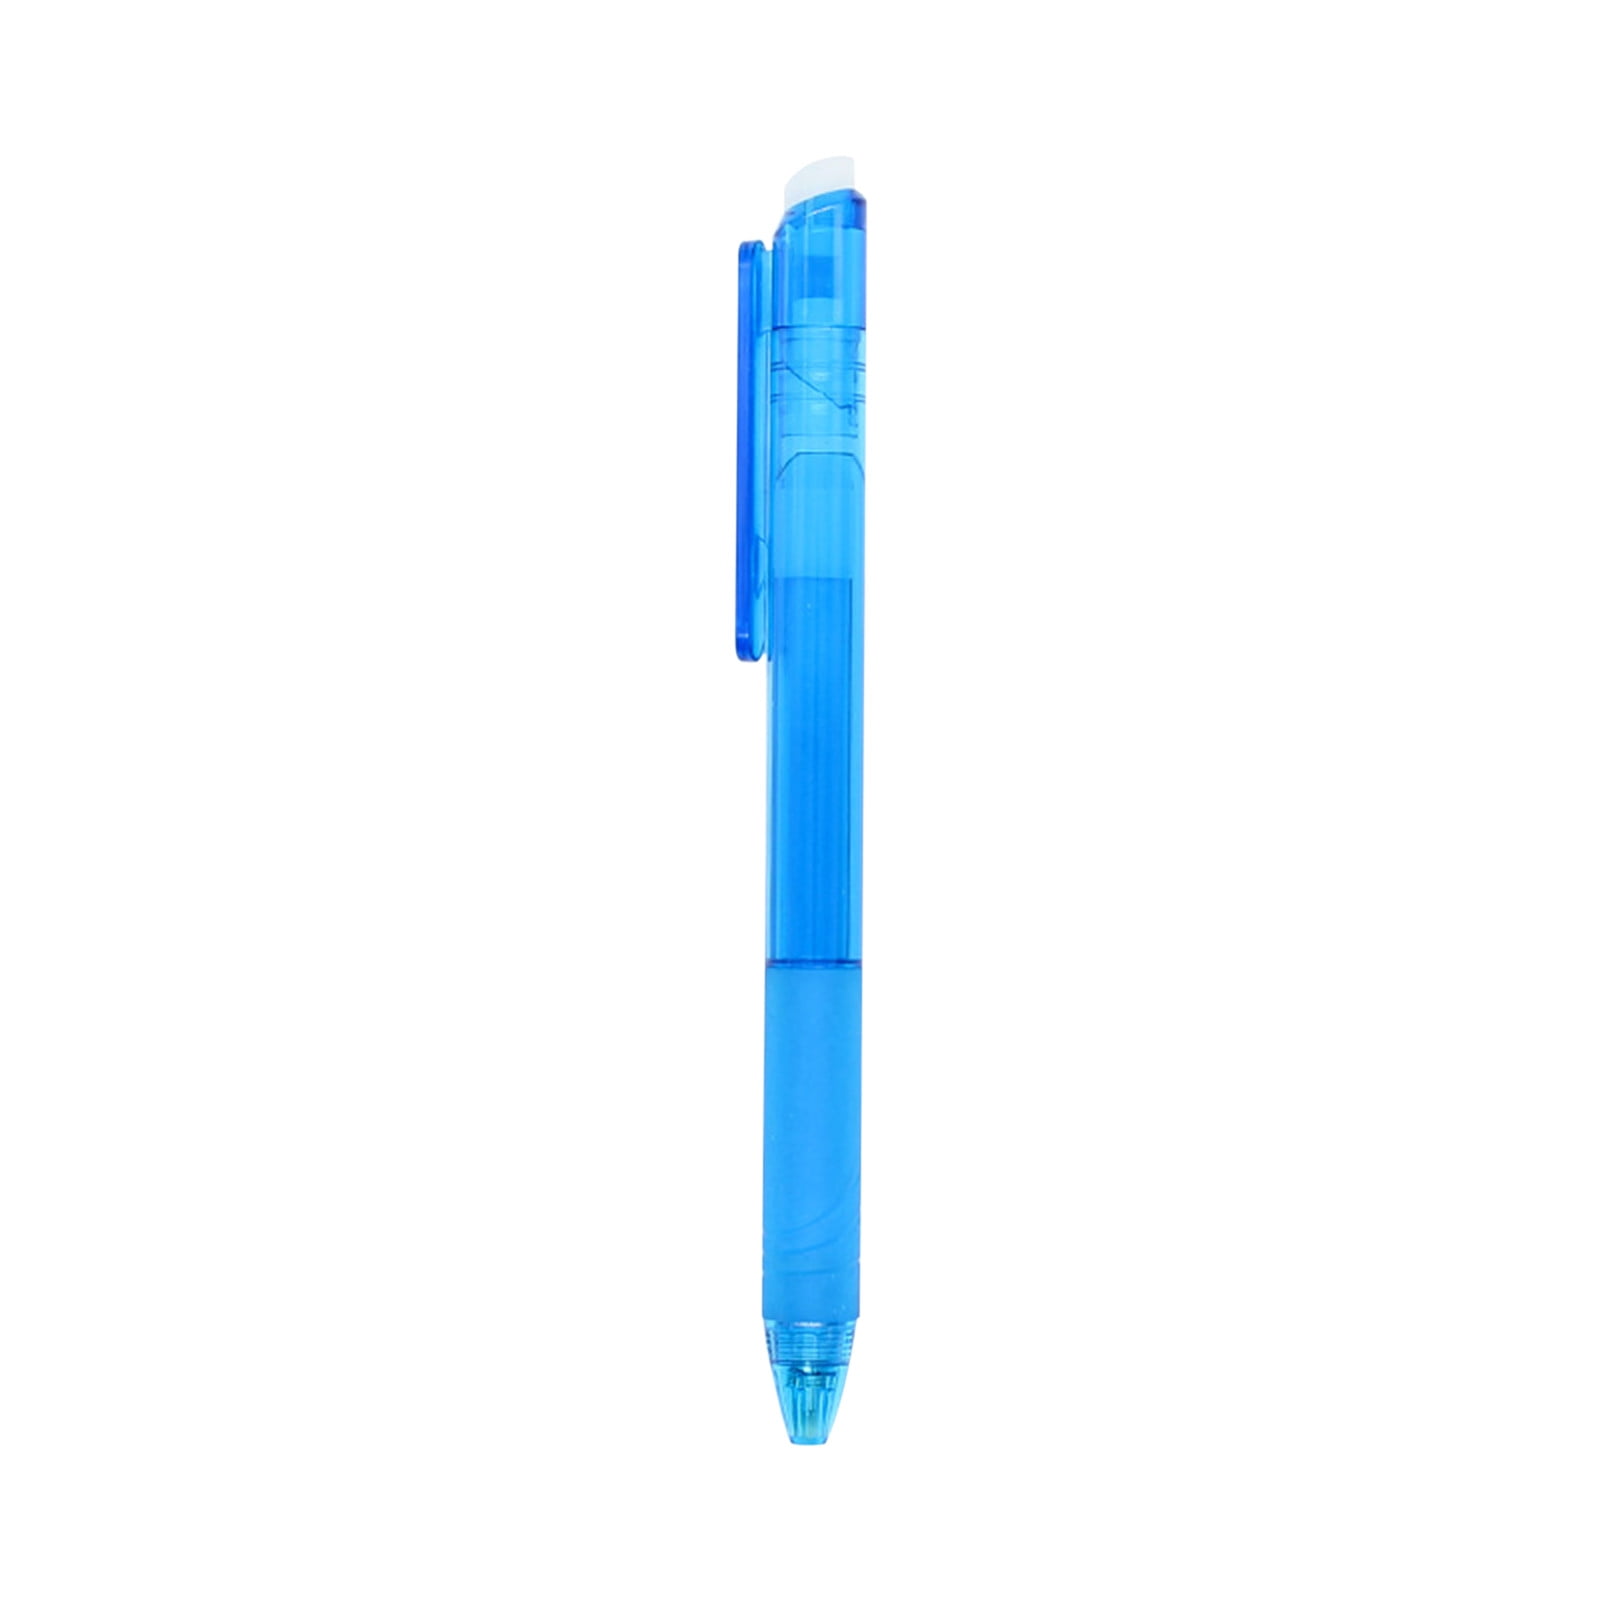 12pcs Mixed Color Gel Pen, Basics Portable Gel Rollerball Pen For